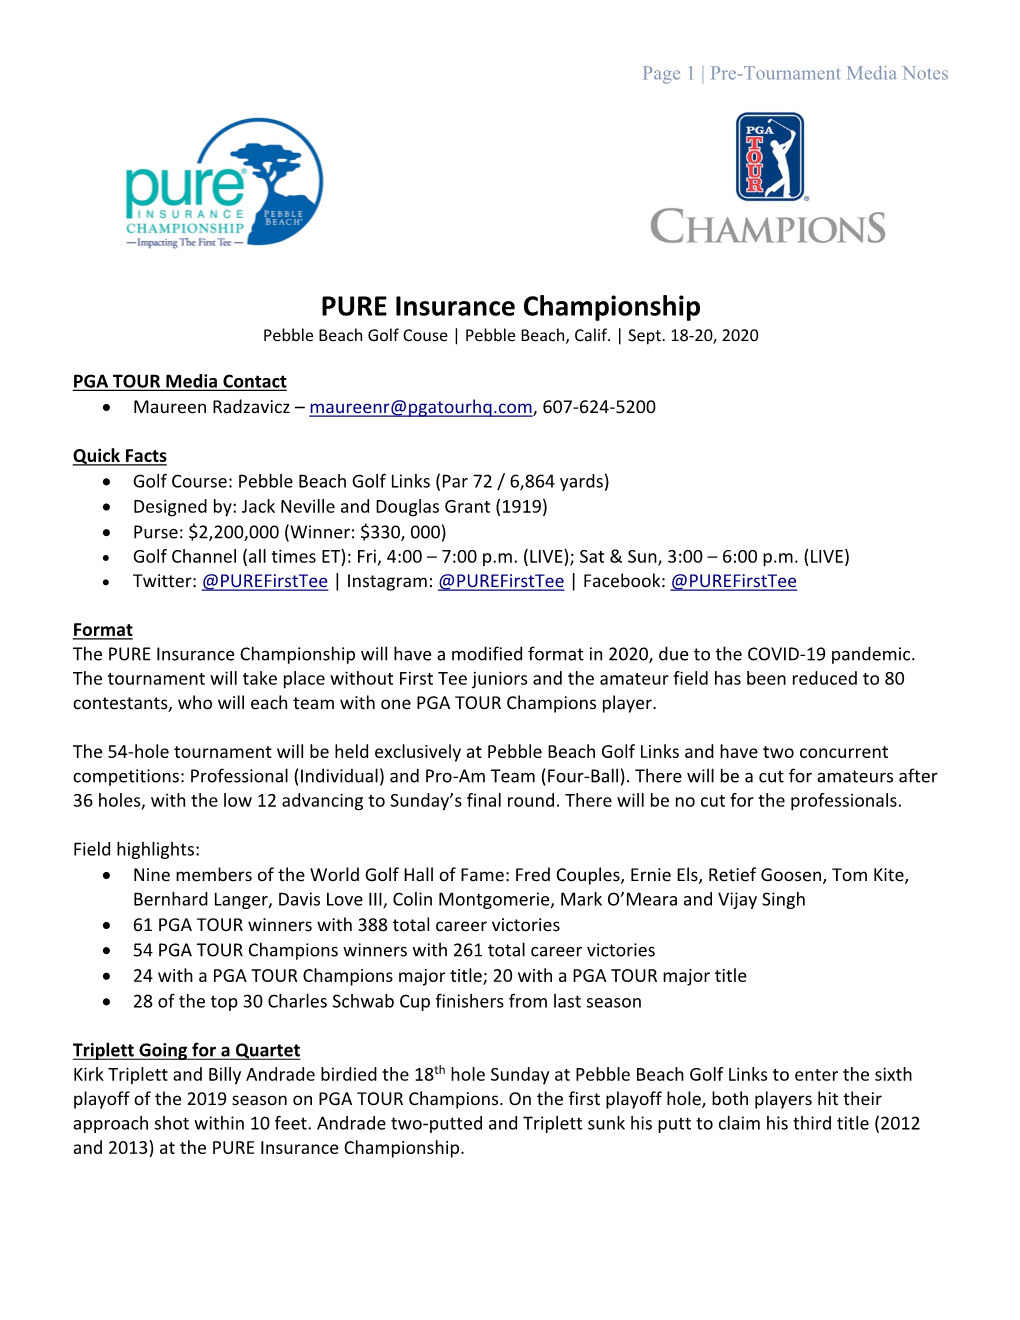 PURE Insurance Championship Pebble Beach Golf Couse | Pebble Beach, Calif